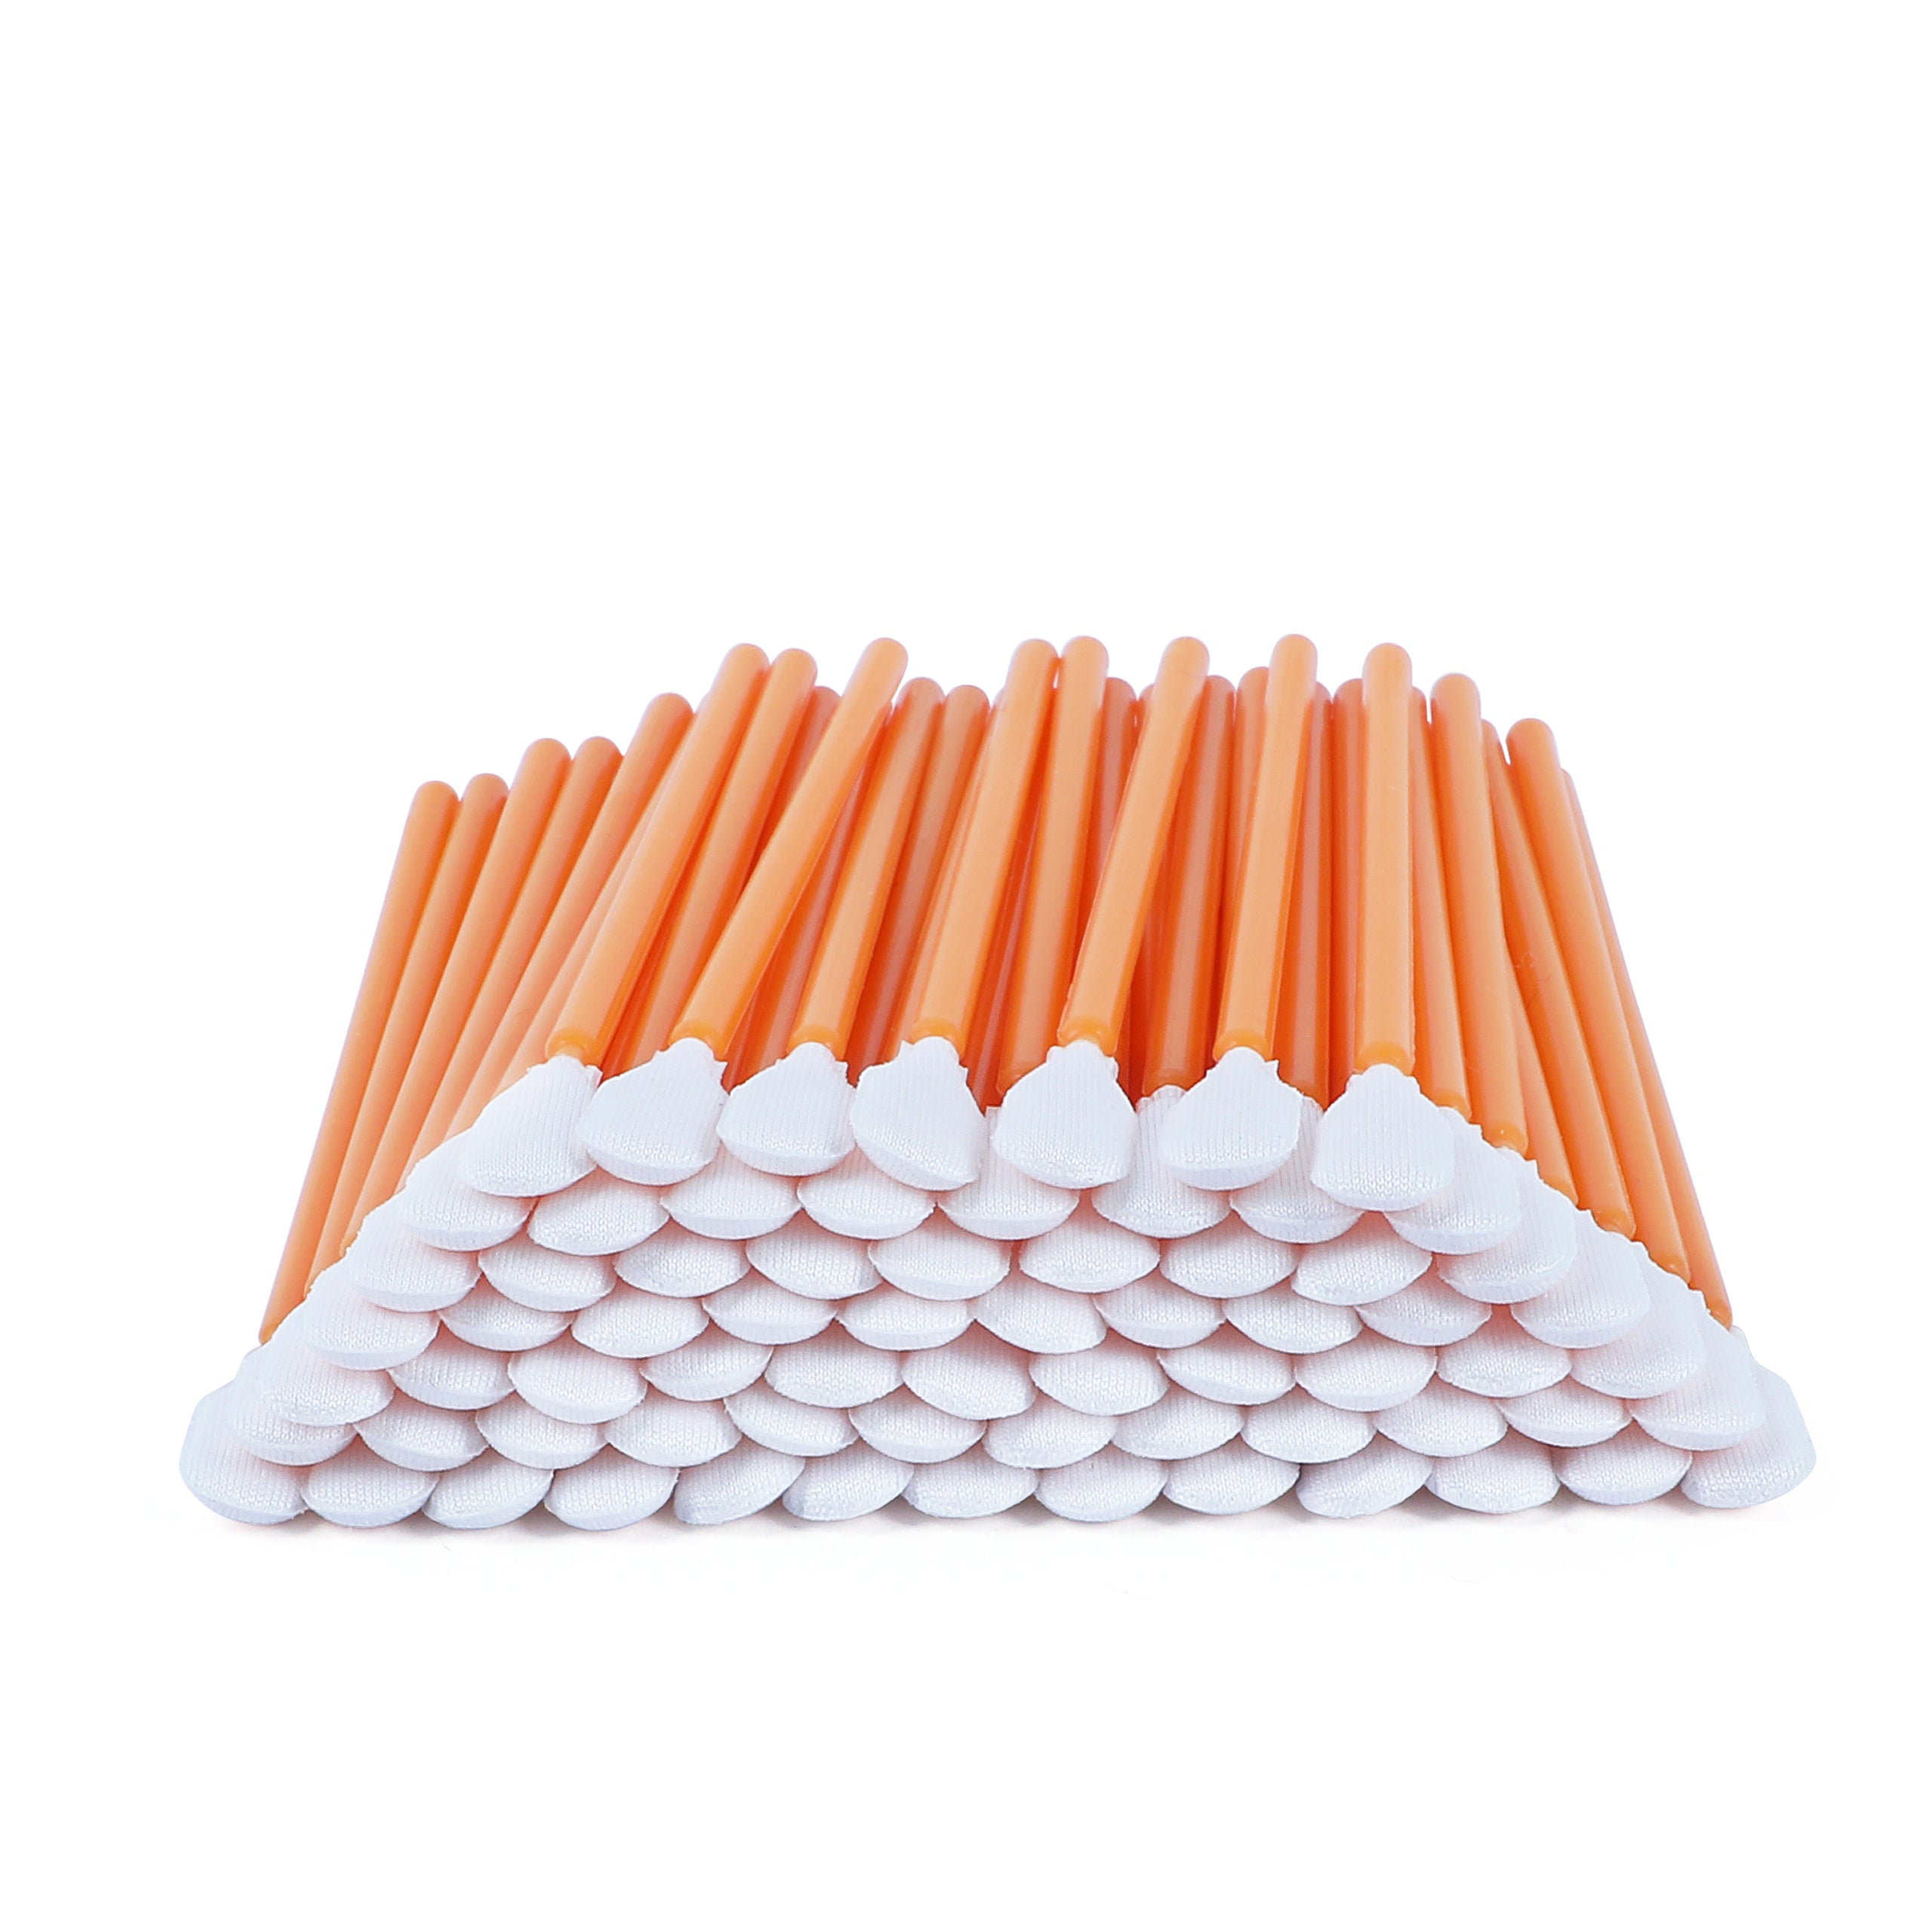 6.3" Microfiber Detailing Polyester Swabs (1,000 pcs, Orange, Length/Swab Head Width=160 mm/6.5 mm) Long Cleaning Swabs Multipurpose Purpose Lint-free Cleanroom Swab Sticks (A5157A)